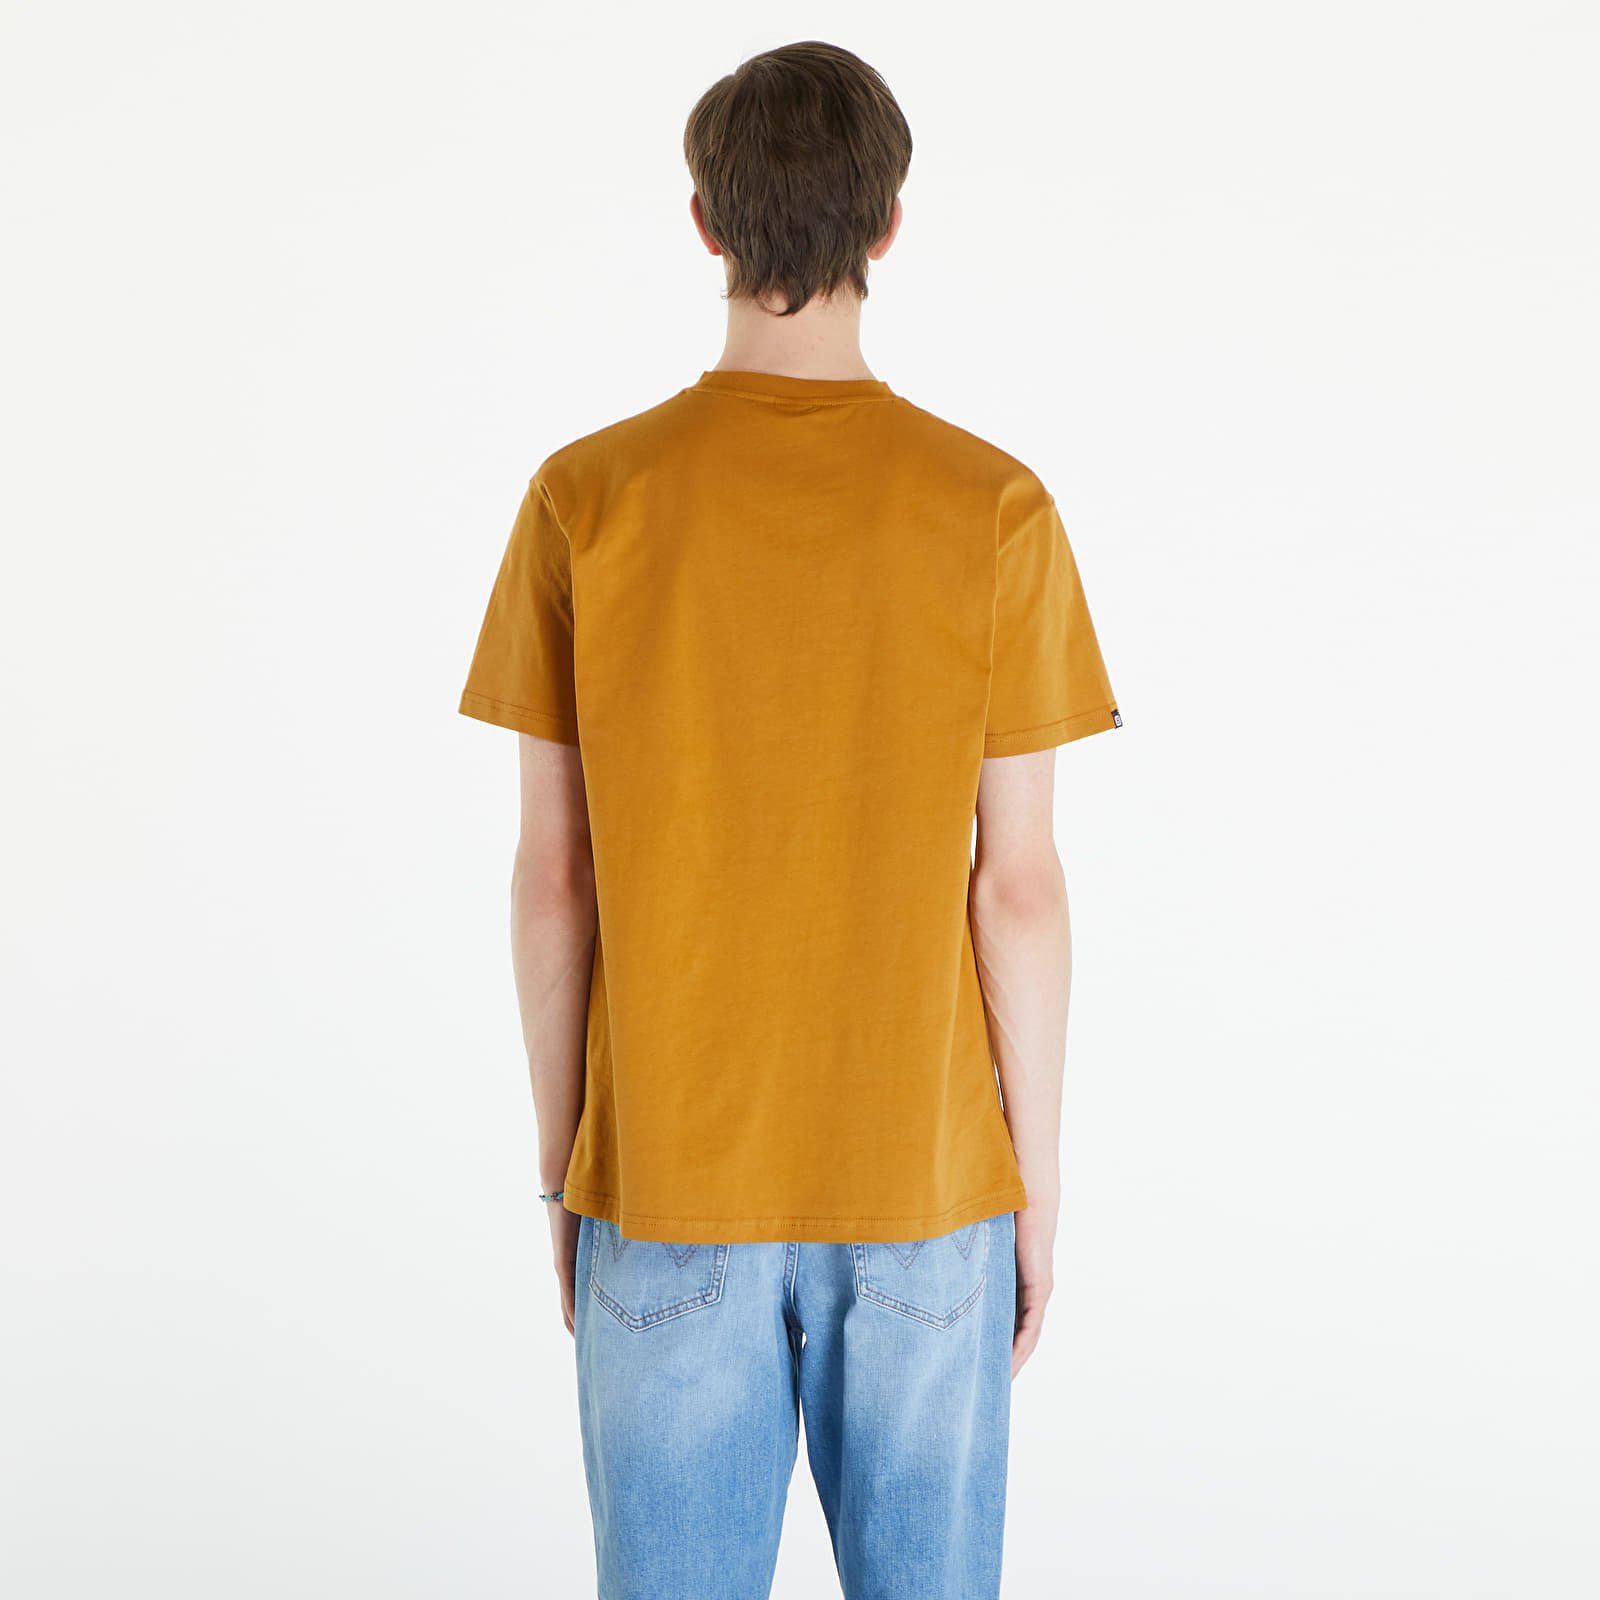 Hf89 T-Shirt Spruce Yellow